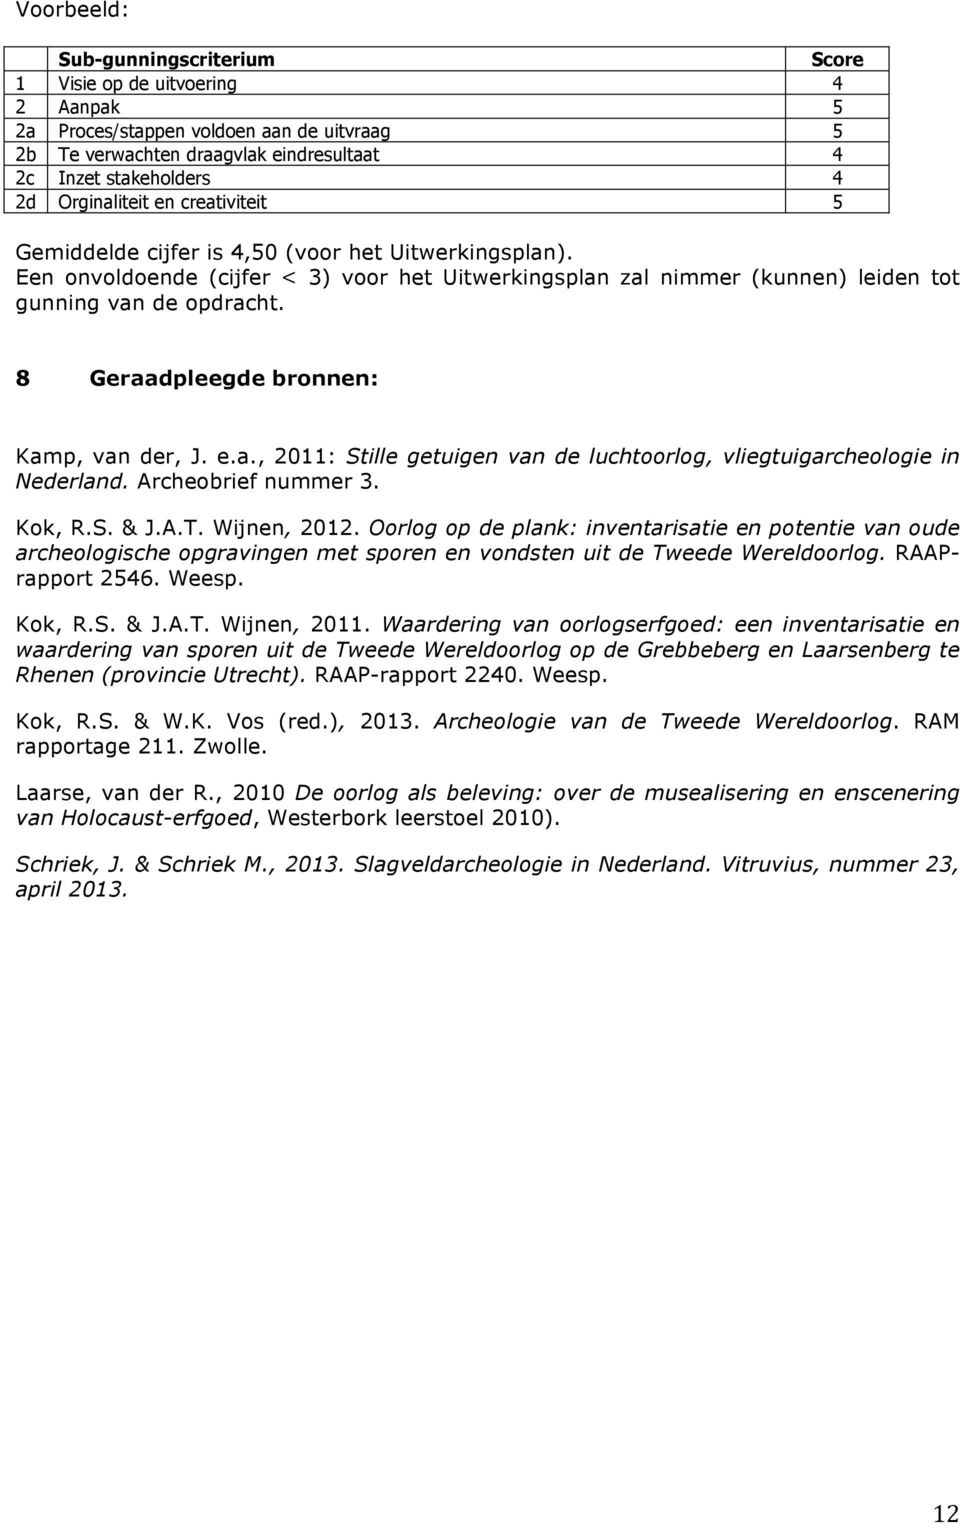 8 Geraadpleegde bronnen: Kamp, van der, J. e.a., 2011: Stille getuigen van de luchtoorlog, vliegtuigarcheologie in Nederland. Archeobrief nummer 3. Kok, R.S. & J.A.T. Wijnen, 2012.